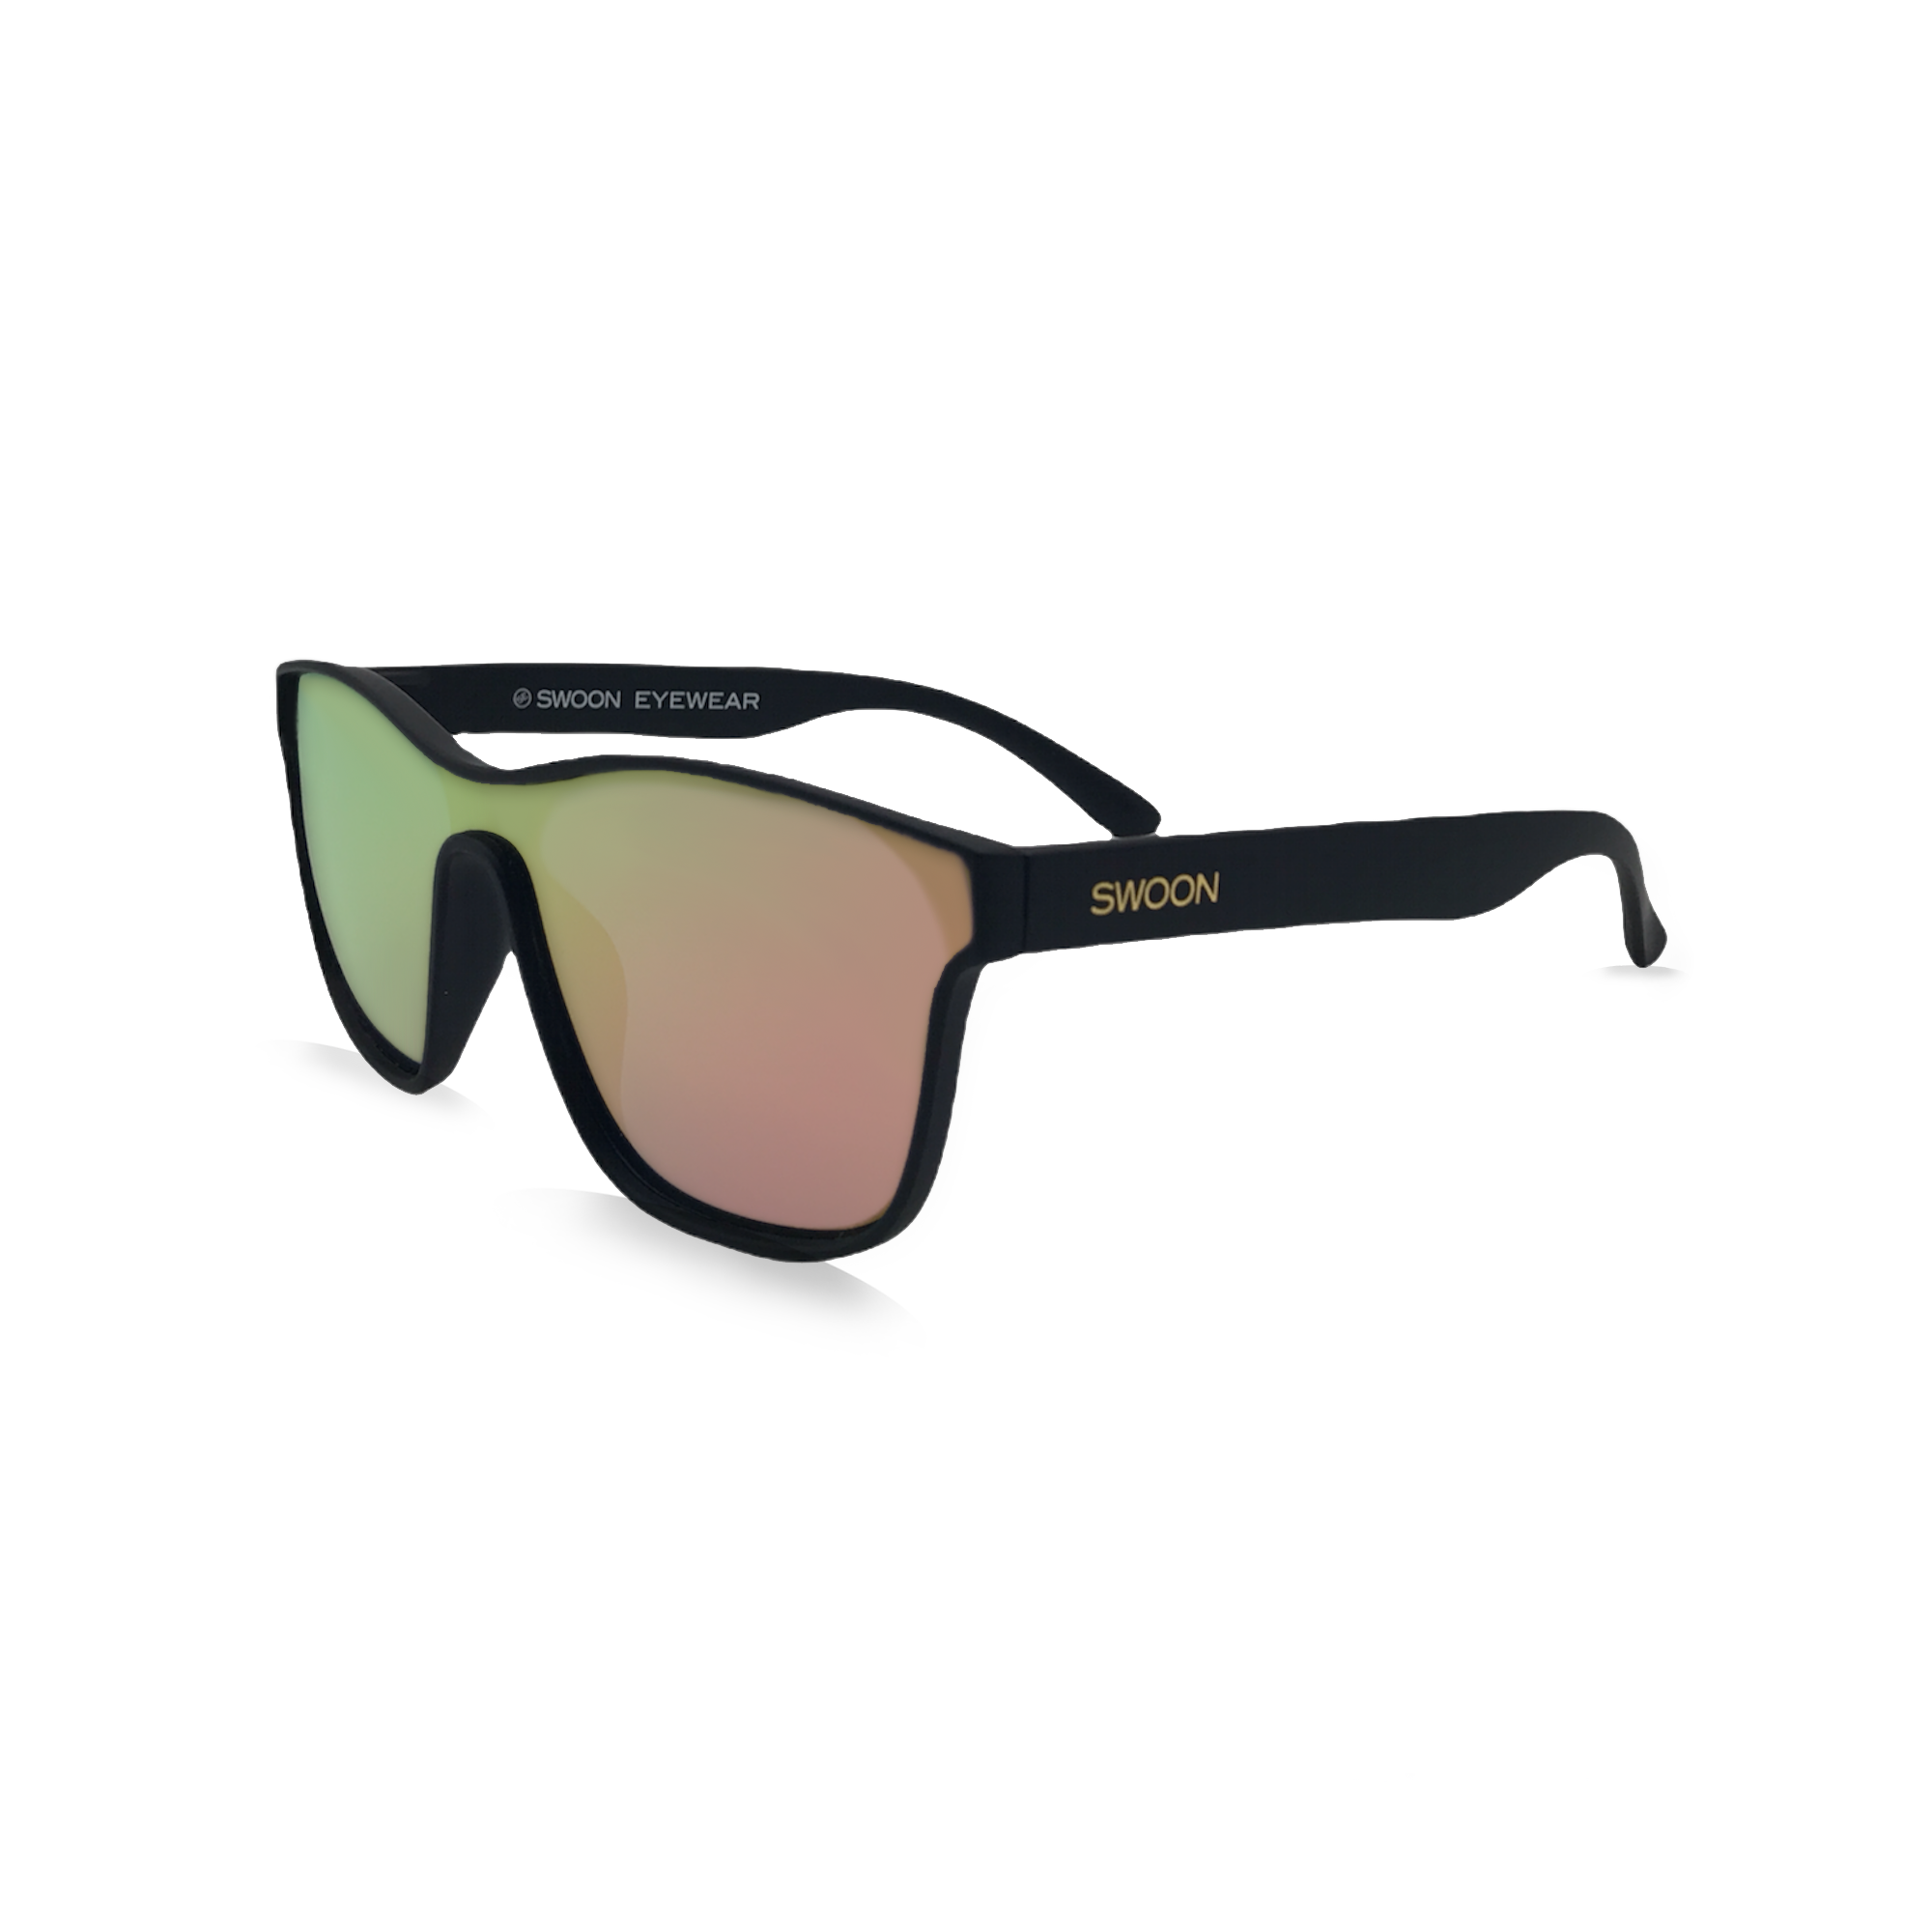 Polarized Pink Mirror Matte Black Fashion Sunglasses - Swoon Eyewear - Victoria Side View 2